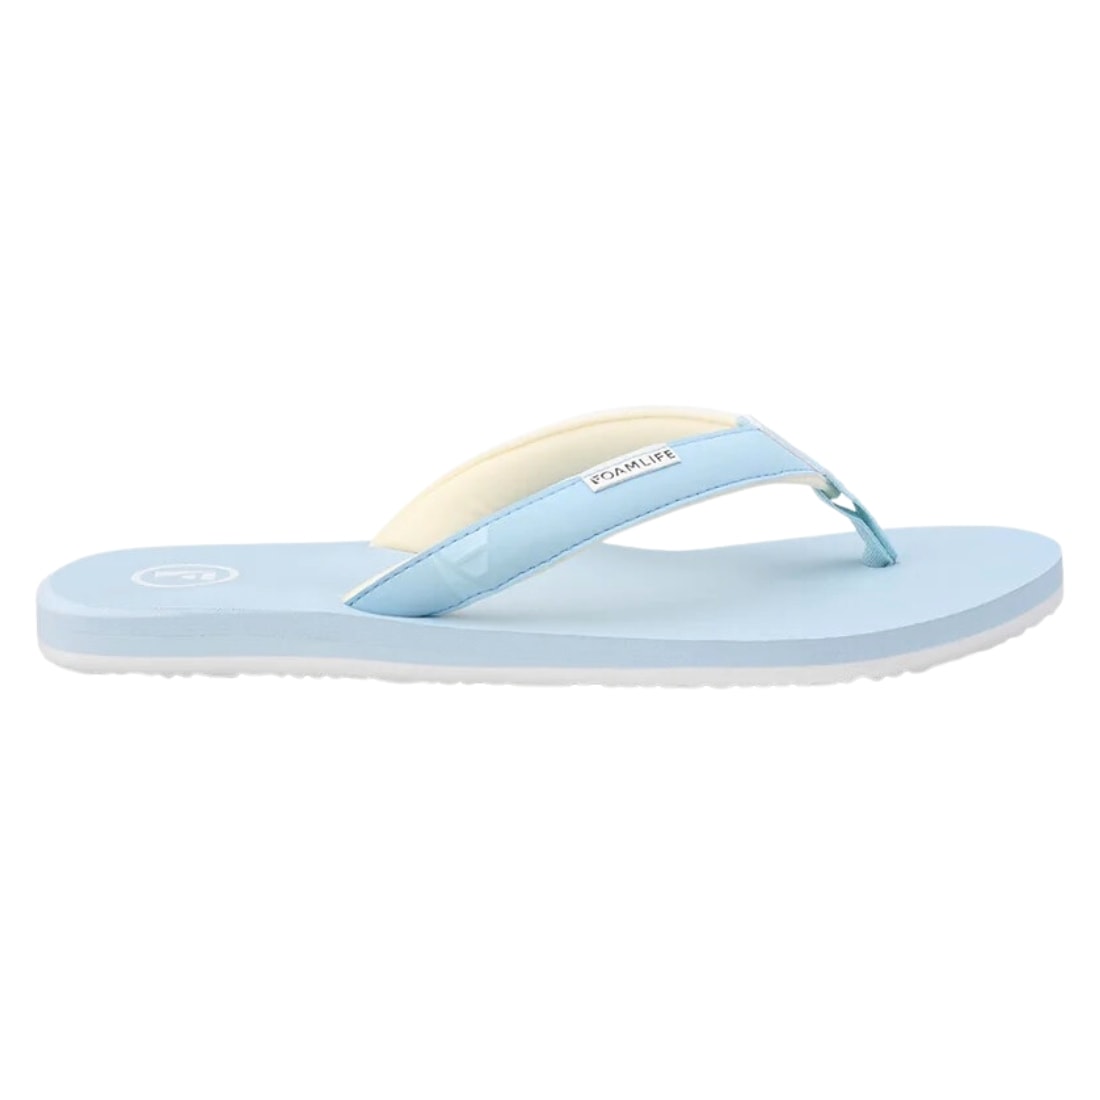 Foamlife Womens Lixi SC Flip Flop Sandals - Powder Blue